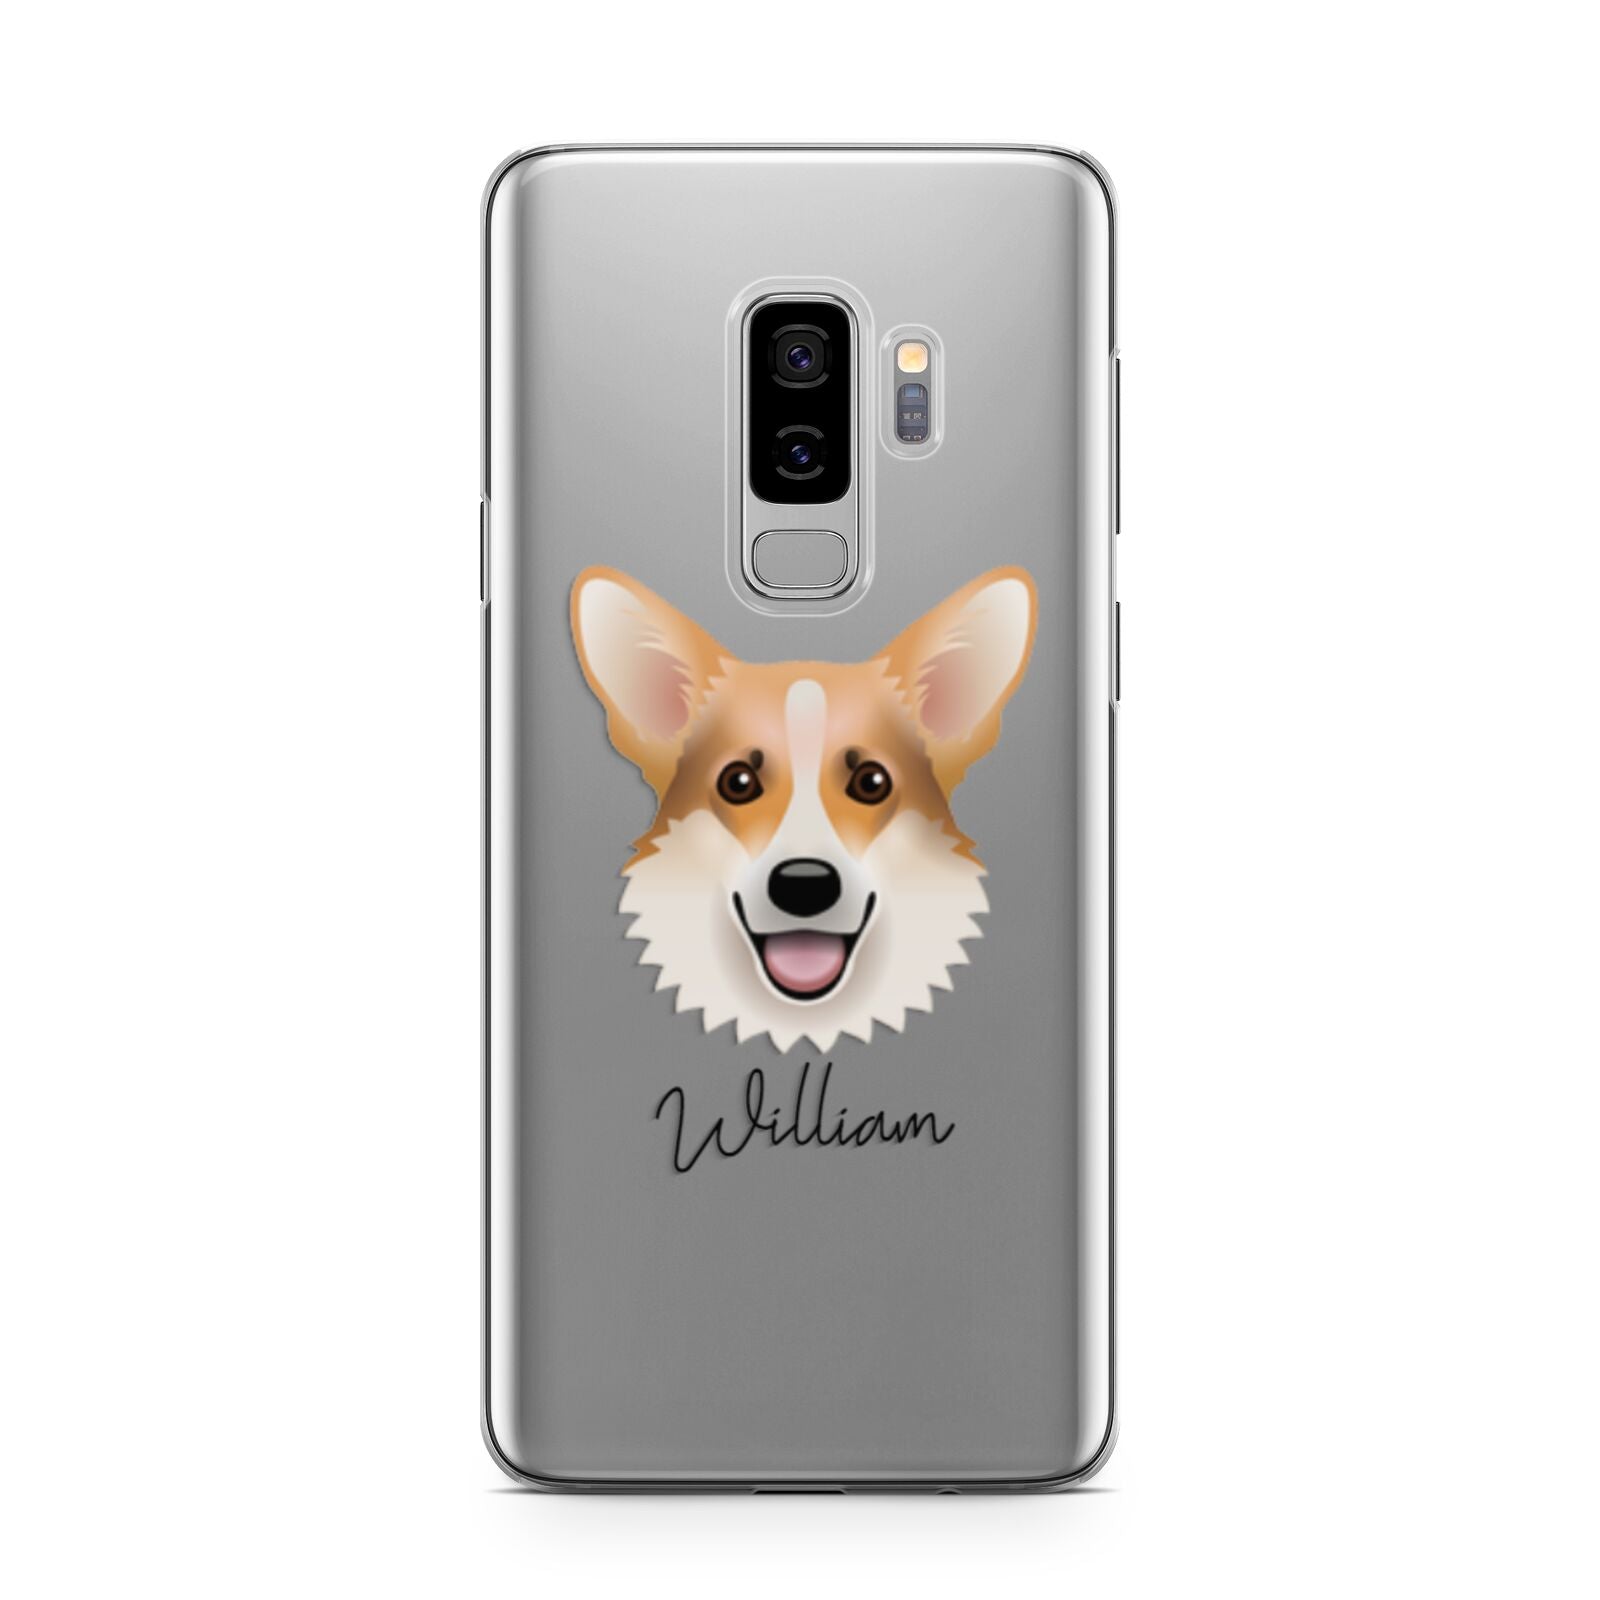 Corgi Personalised Samsung Galaxy S9 Plus Case on Silver phone